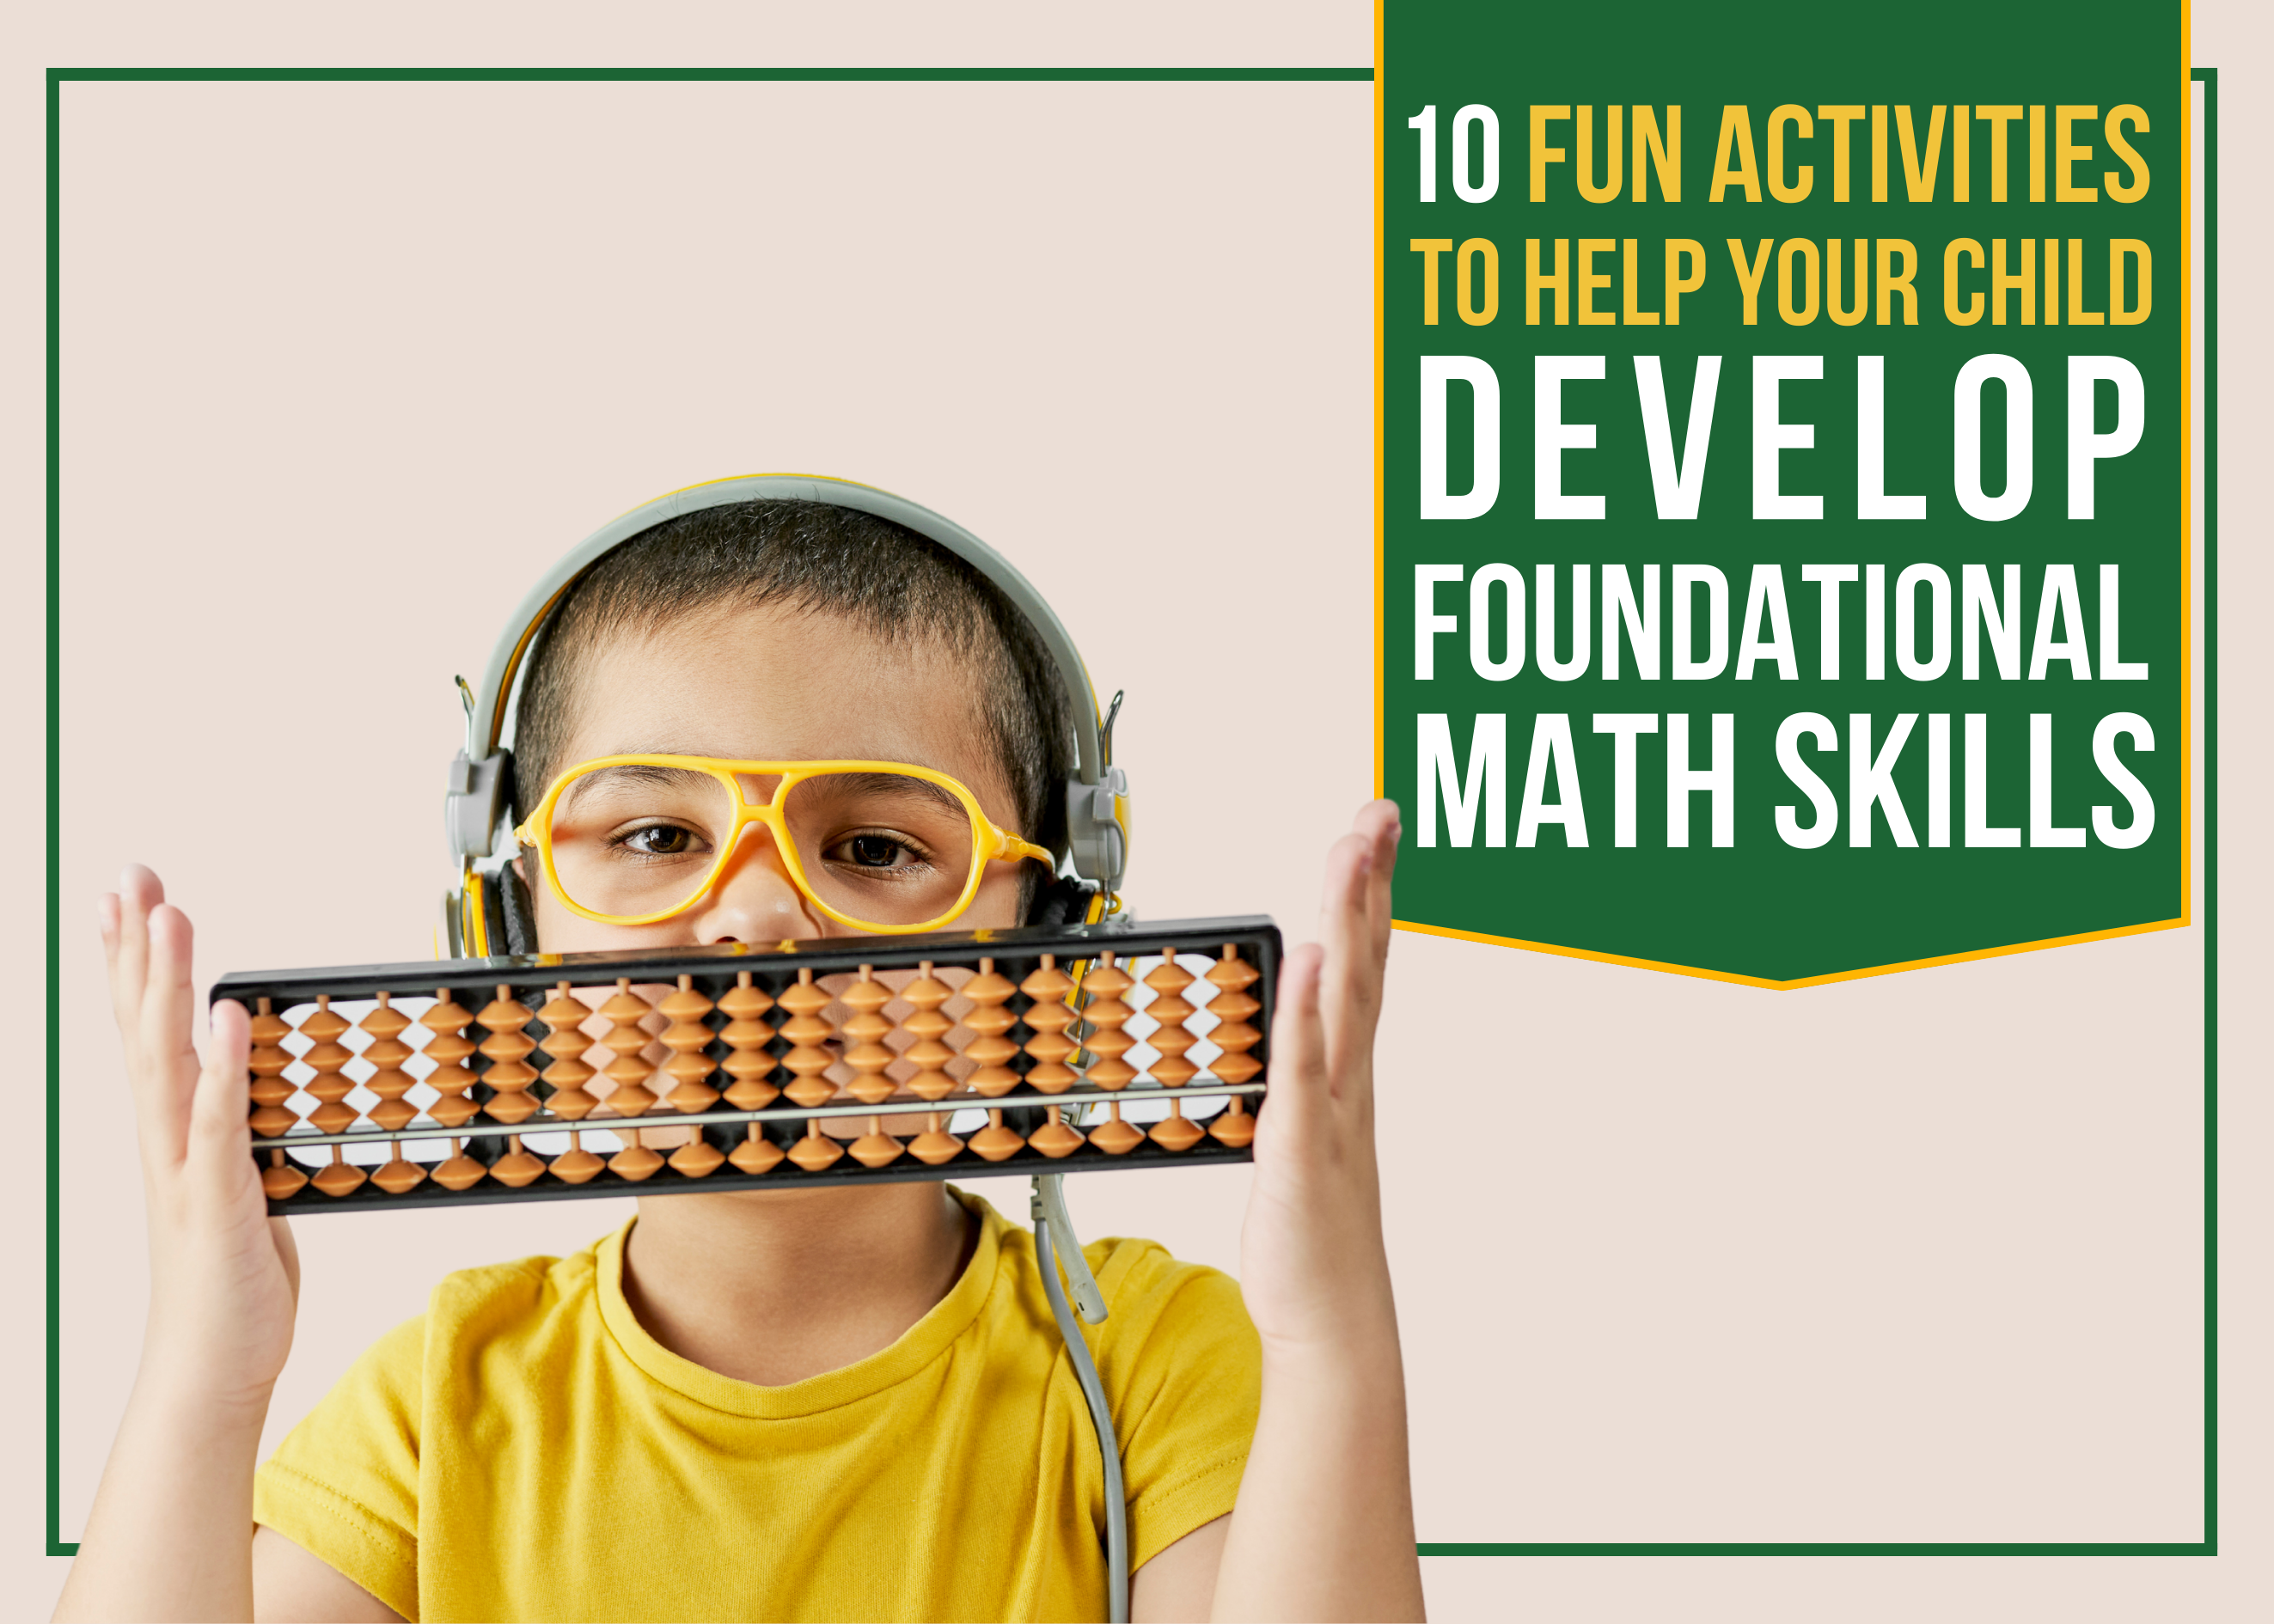 Child Develop Foundational Math Skills